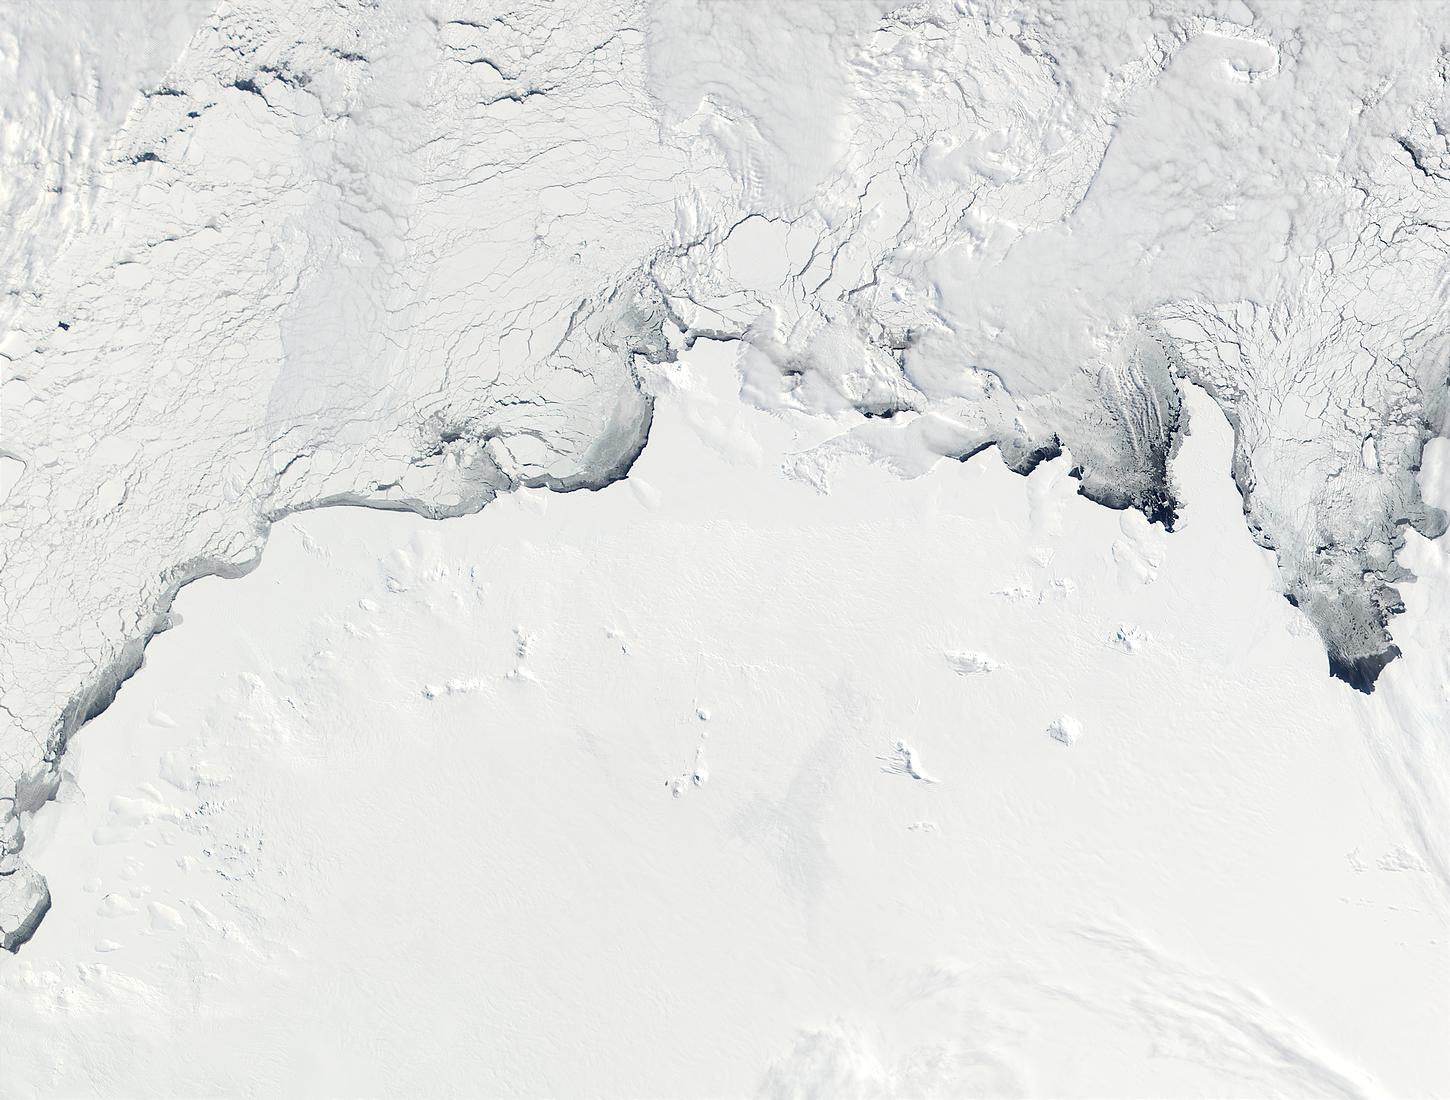 Saunders Coast, Ruppert Coast, Hobbs Coast, Bakutis Coast, and Walgreen Coast, Antarctica - related image preview